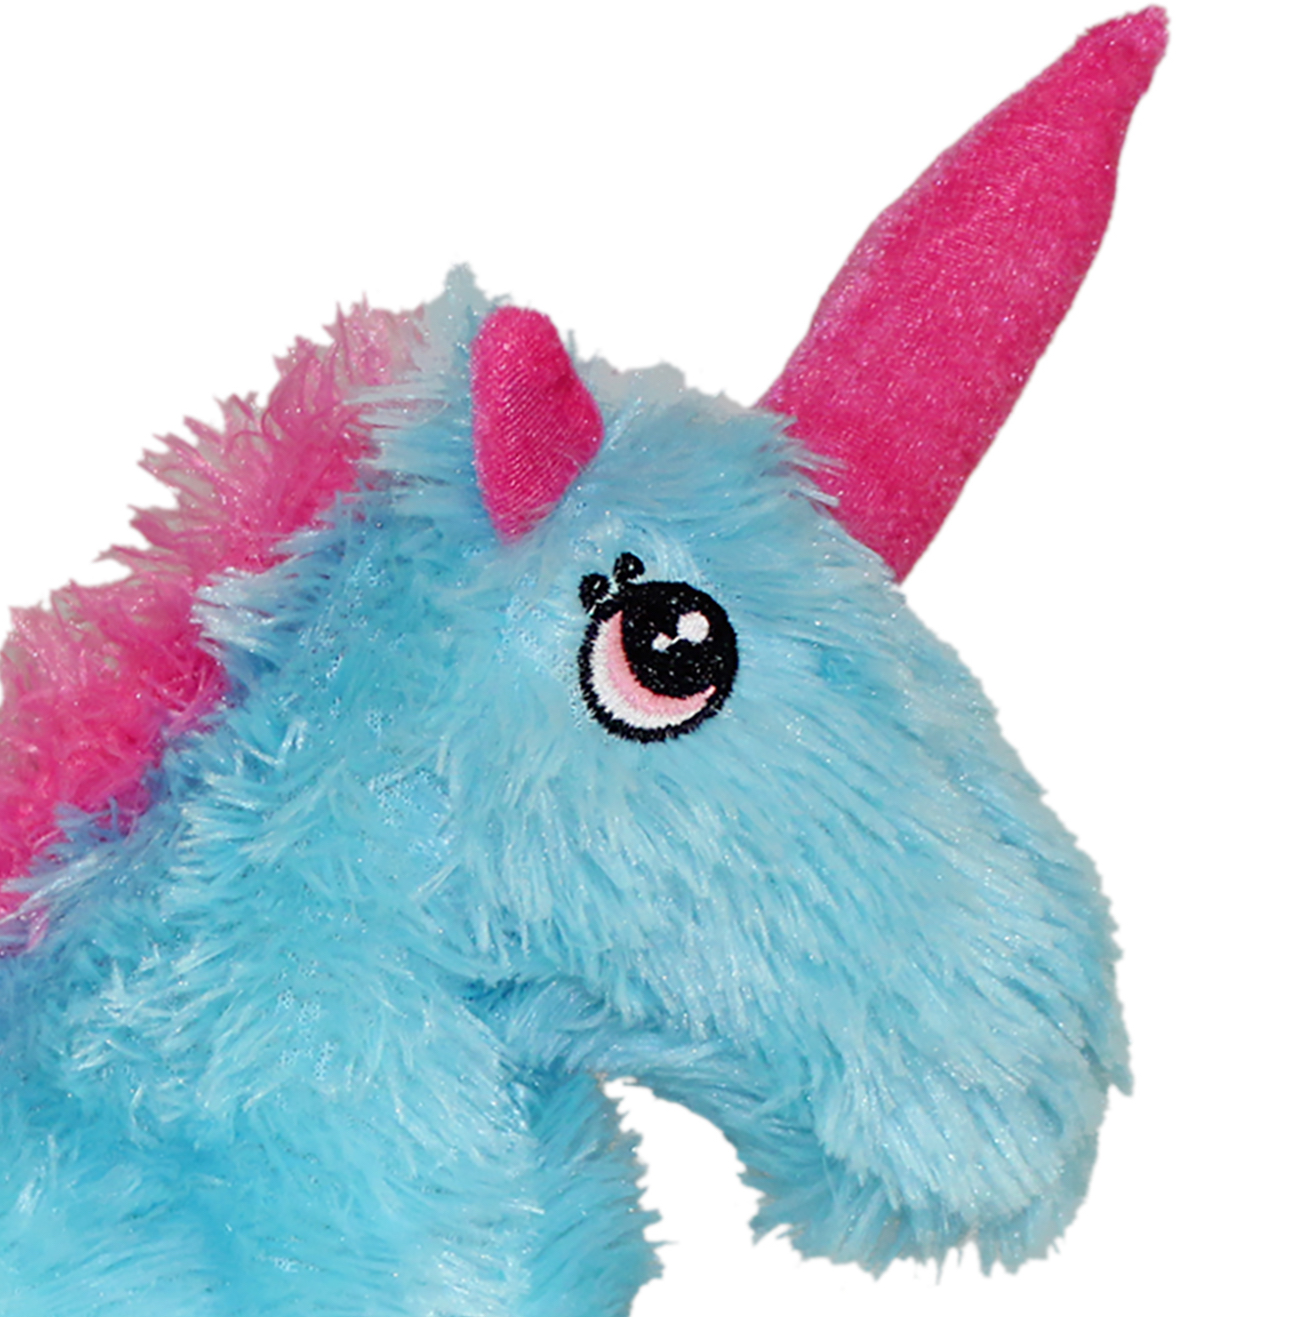 Whimsy & Charm Valentine's Day Sweatheart Love 22" Unicorn Stuffed Animal Plush Toy Soft & Fluffy - Blue - image 4 of 6